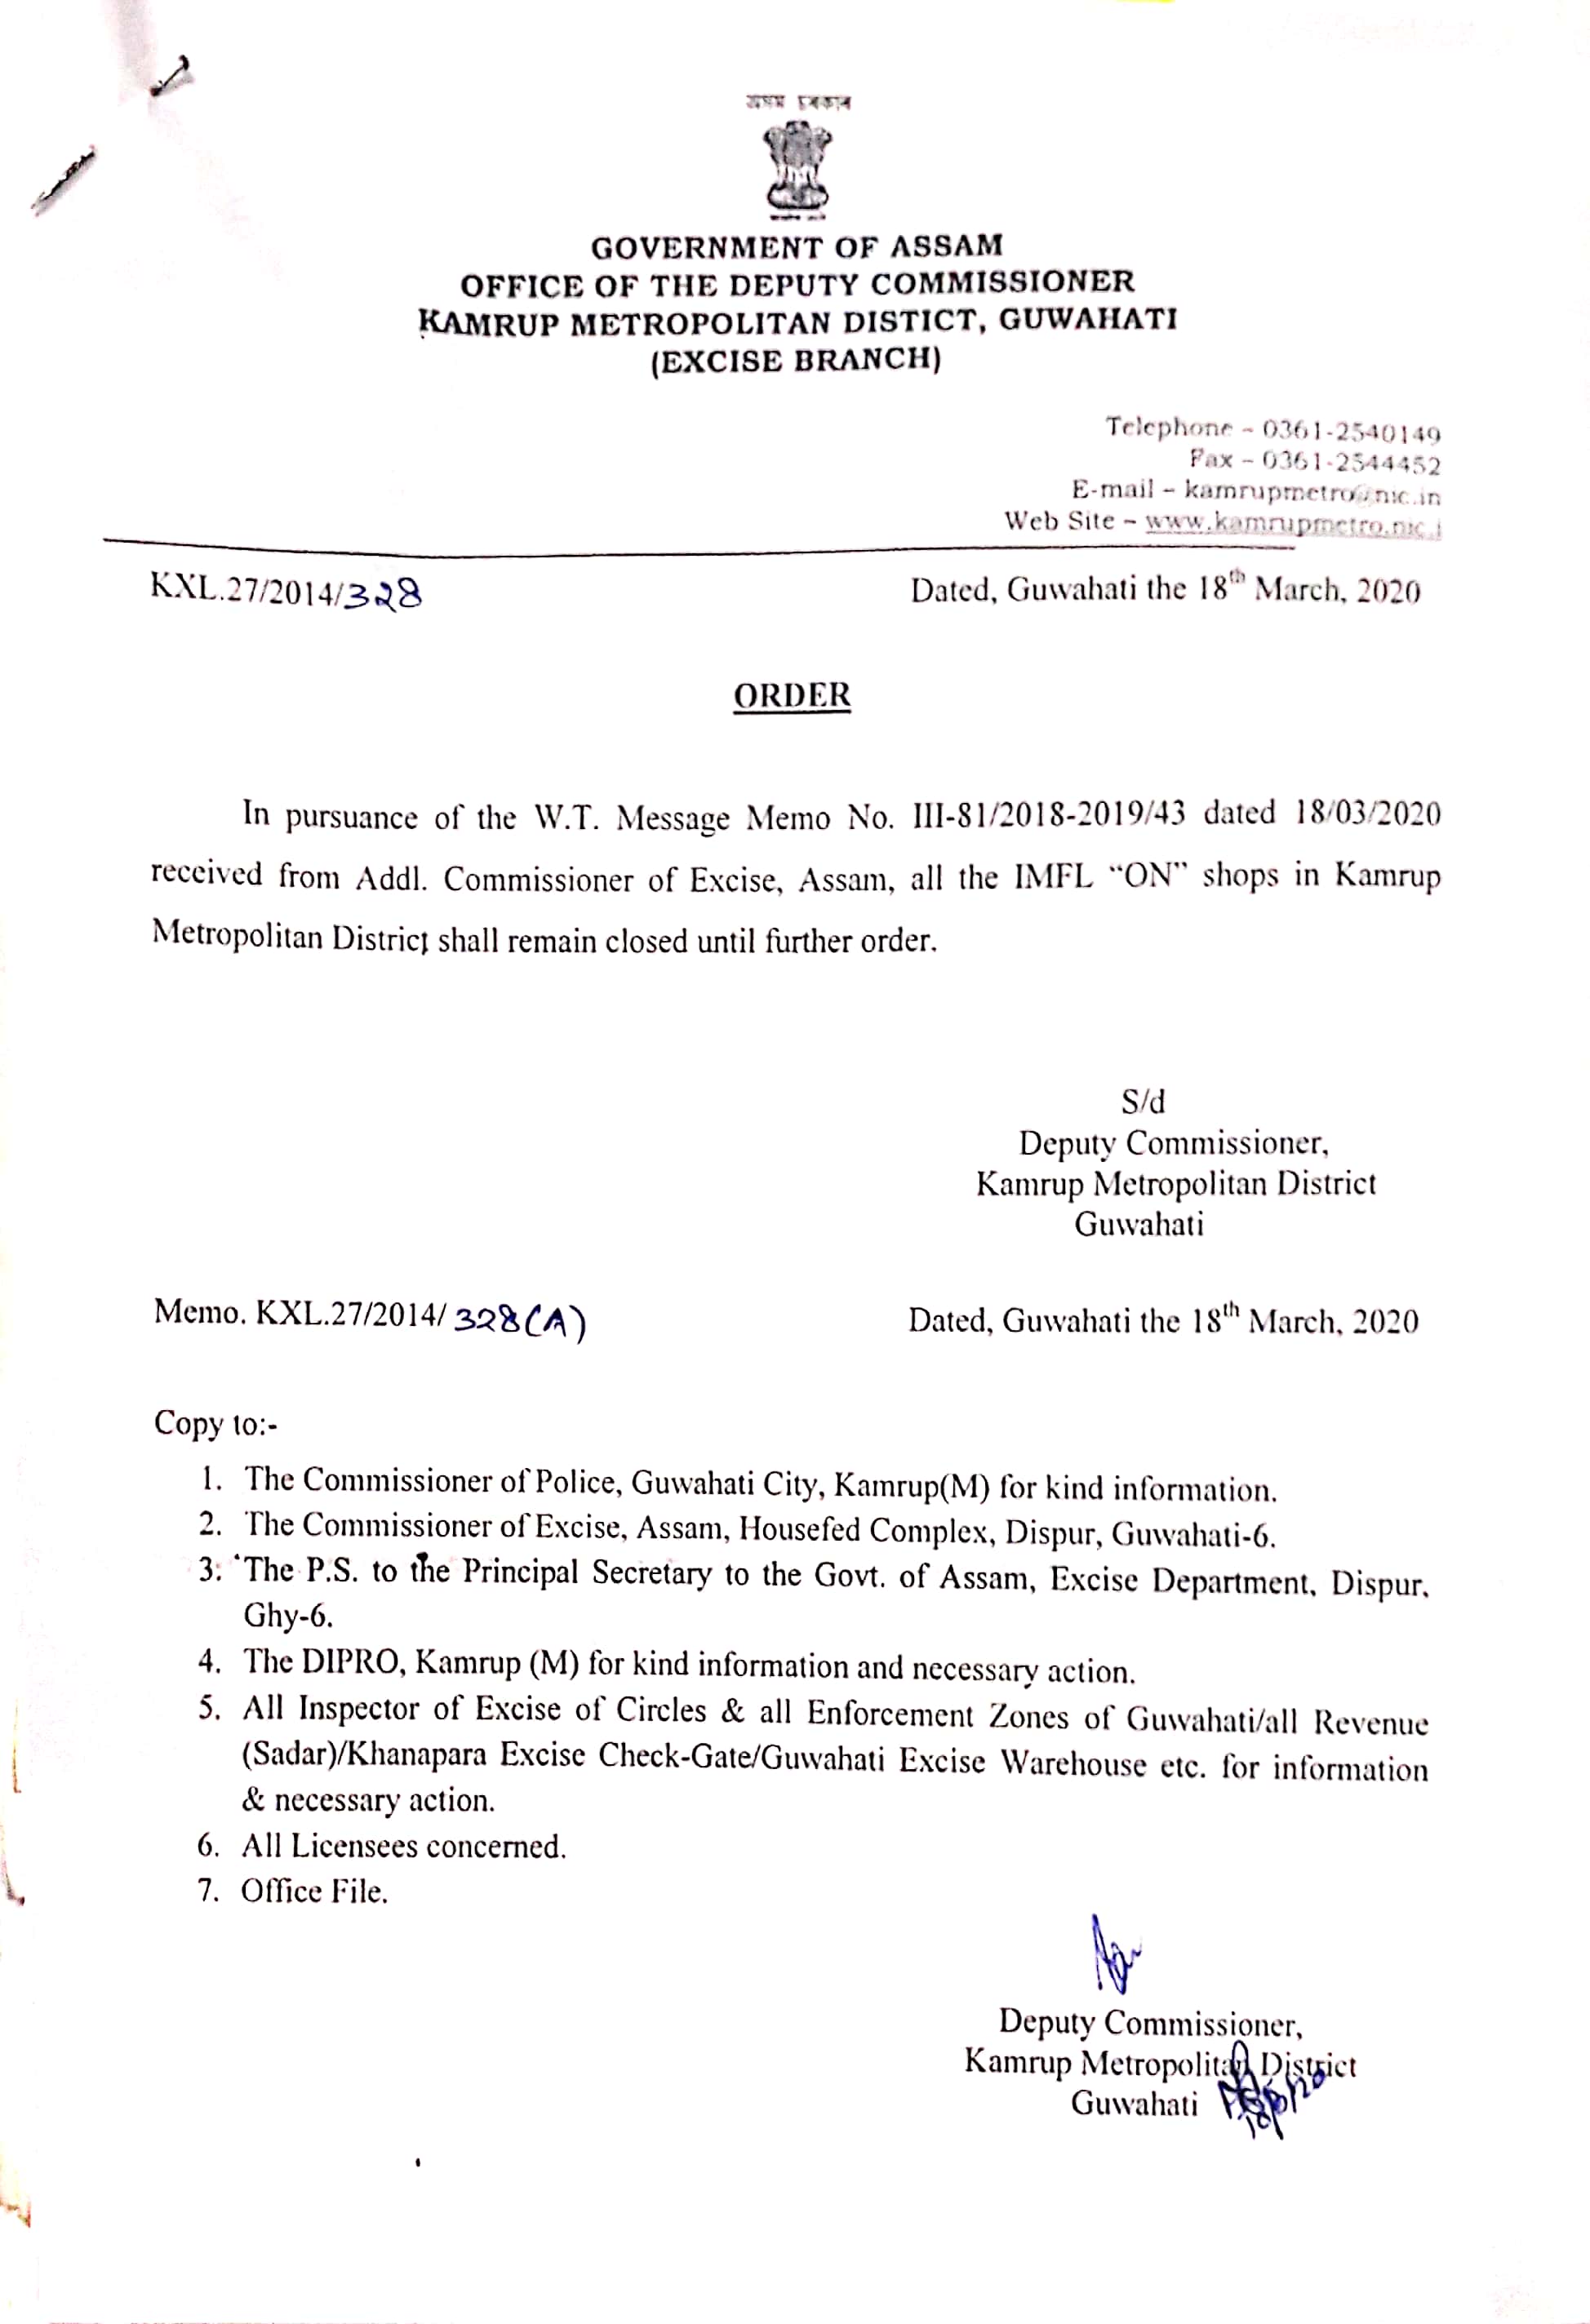 COVID-19 : Kamrup Metro Admin orders closer to Mandir of the City